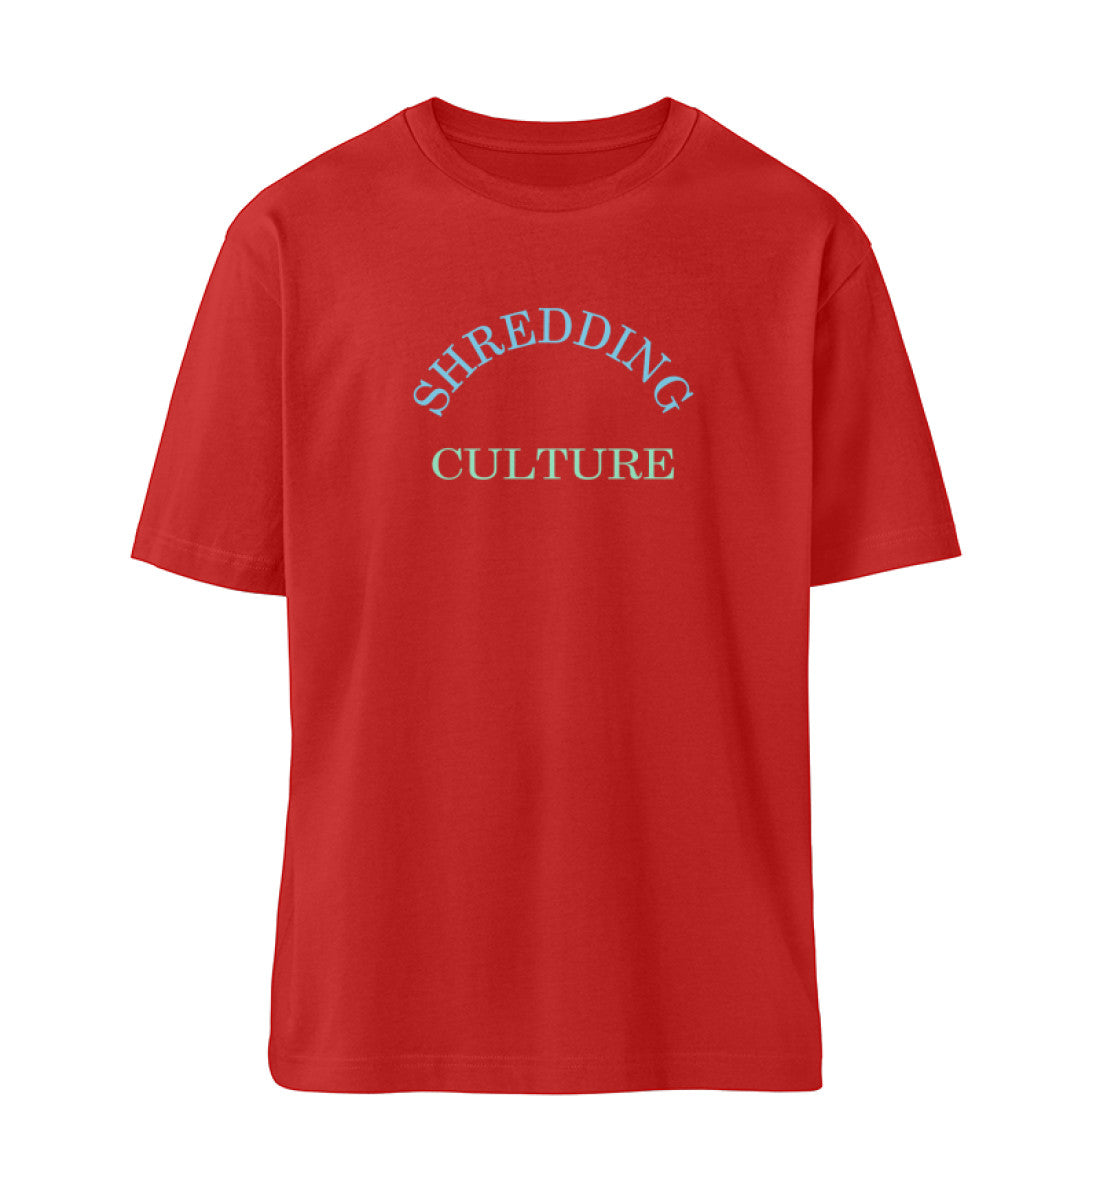 Rotes T-Shirt Unisex Relaxed Fit für Frauen und Männer bedruckt mit dem Design der Roger Rockawoo Kollektion Skateboard Shredding Culture Community